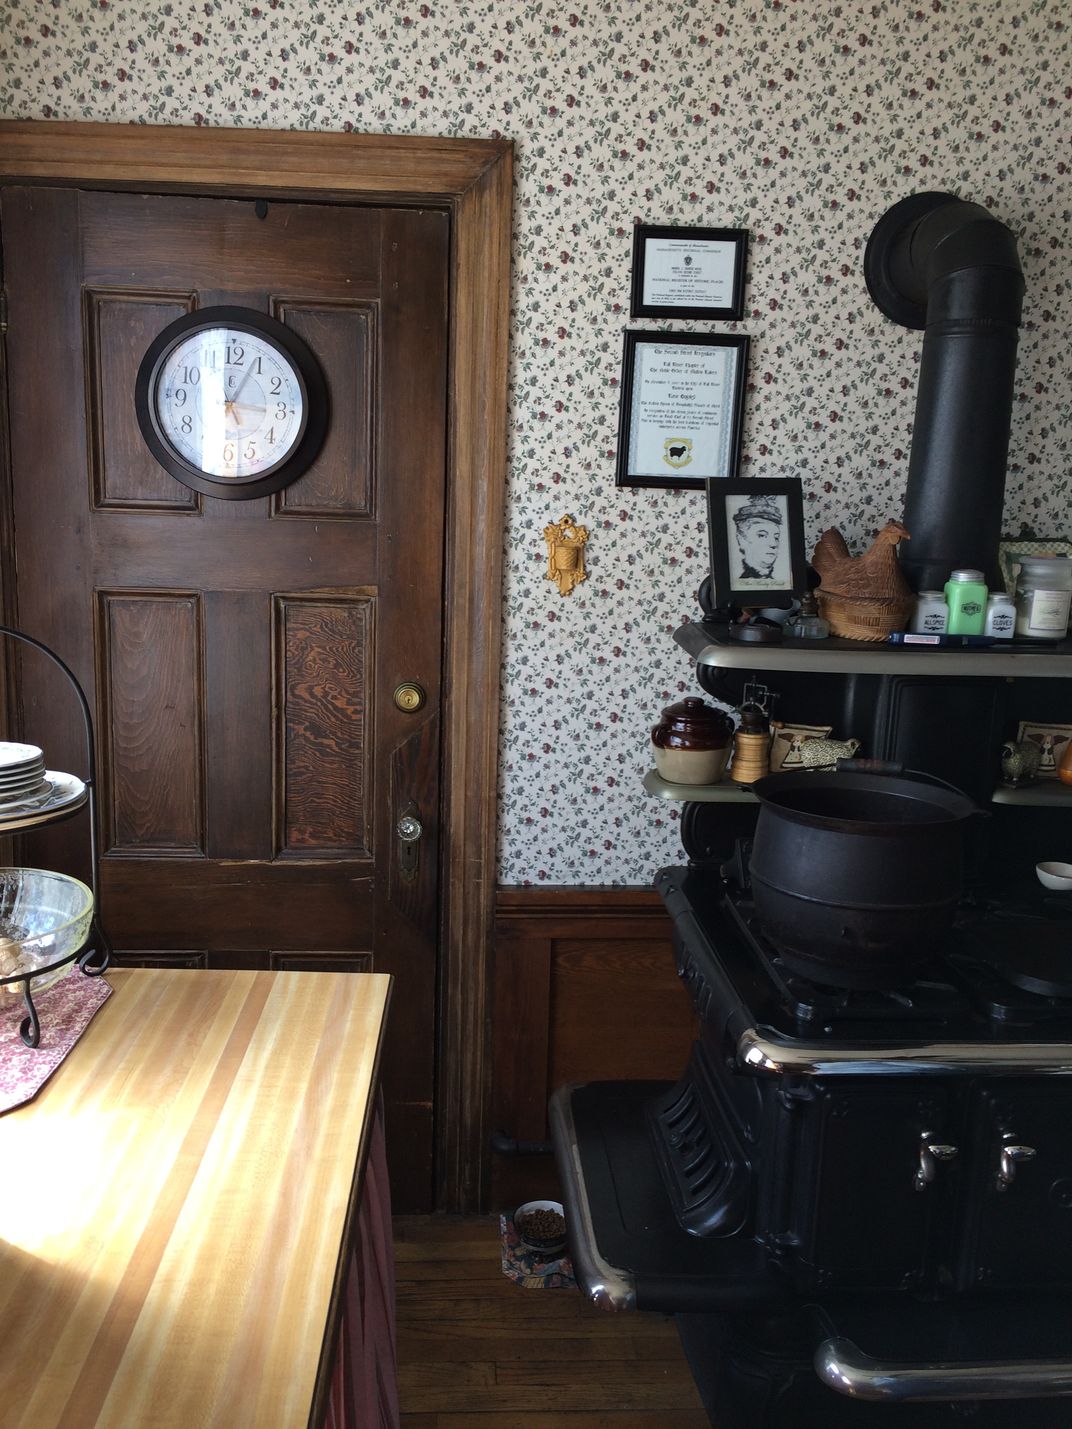 Kitchen inside the Lizzie Borden house